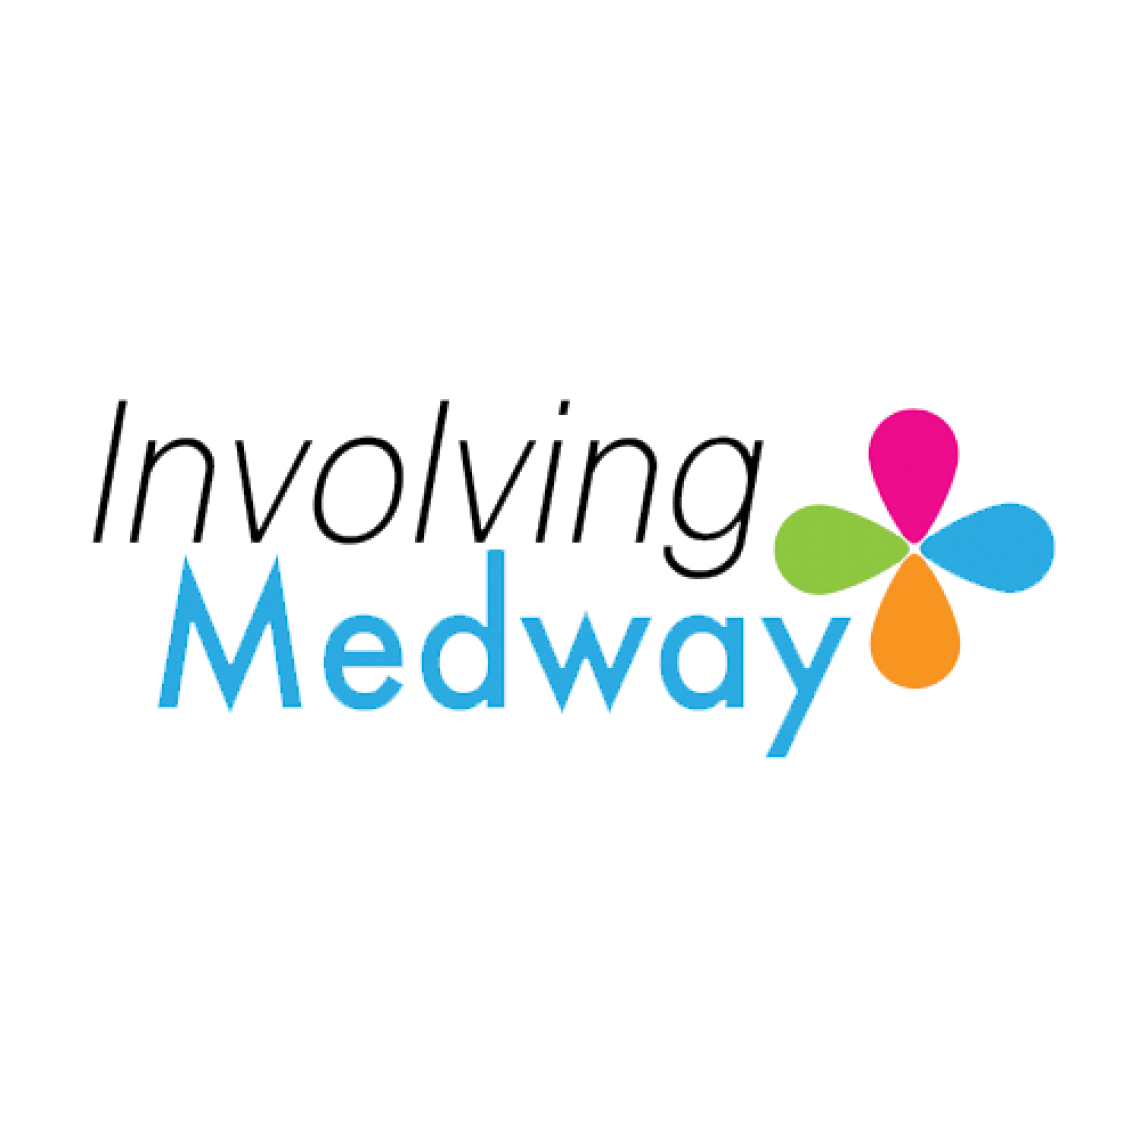 Involving Medway logo